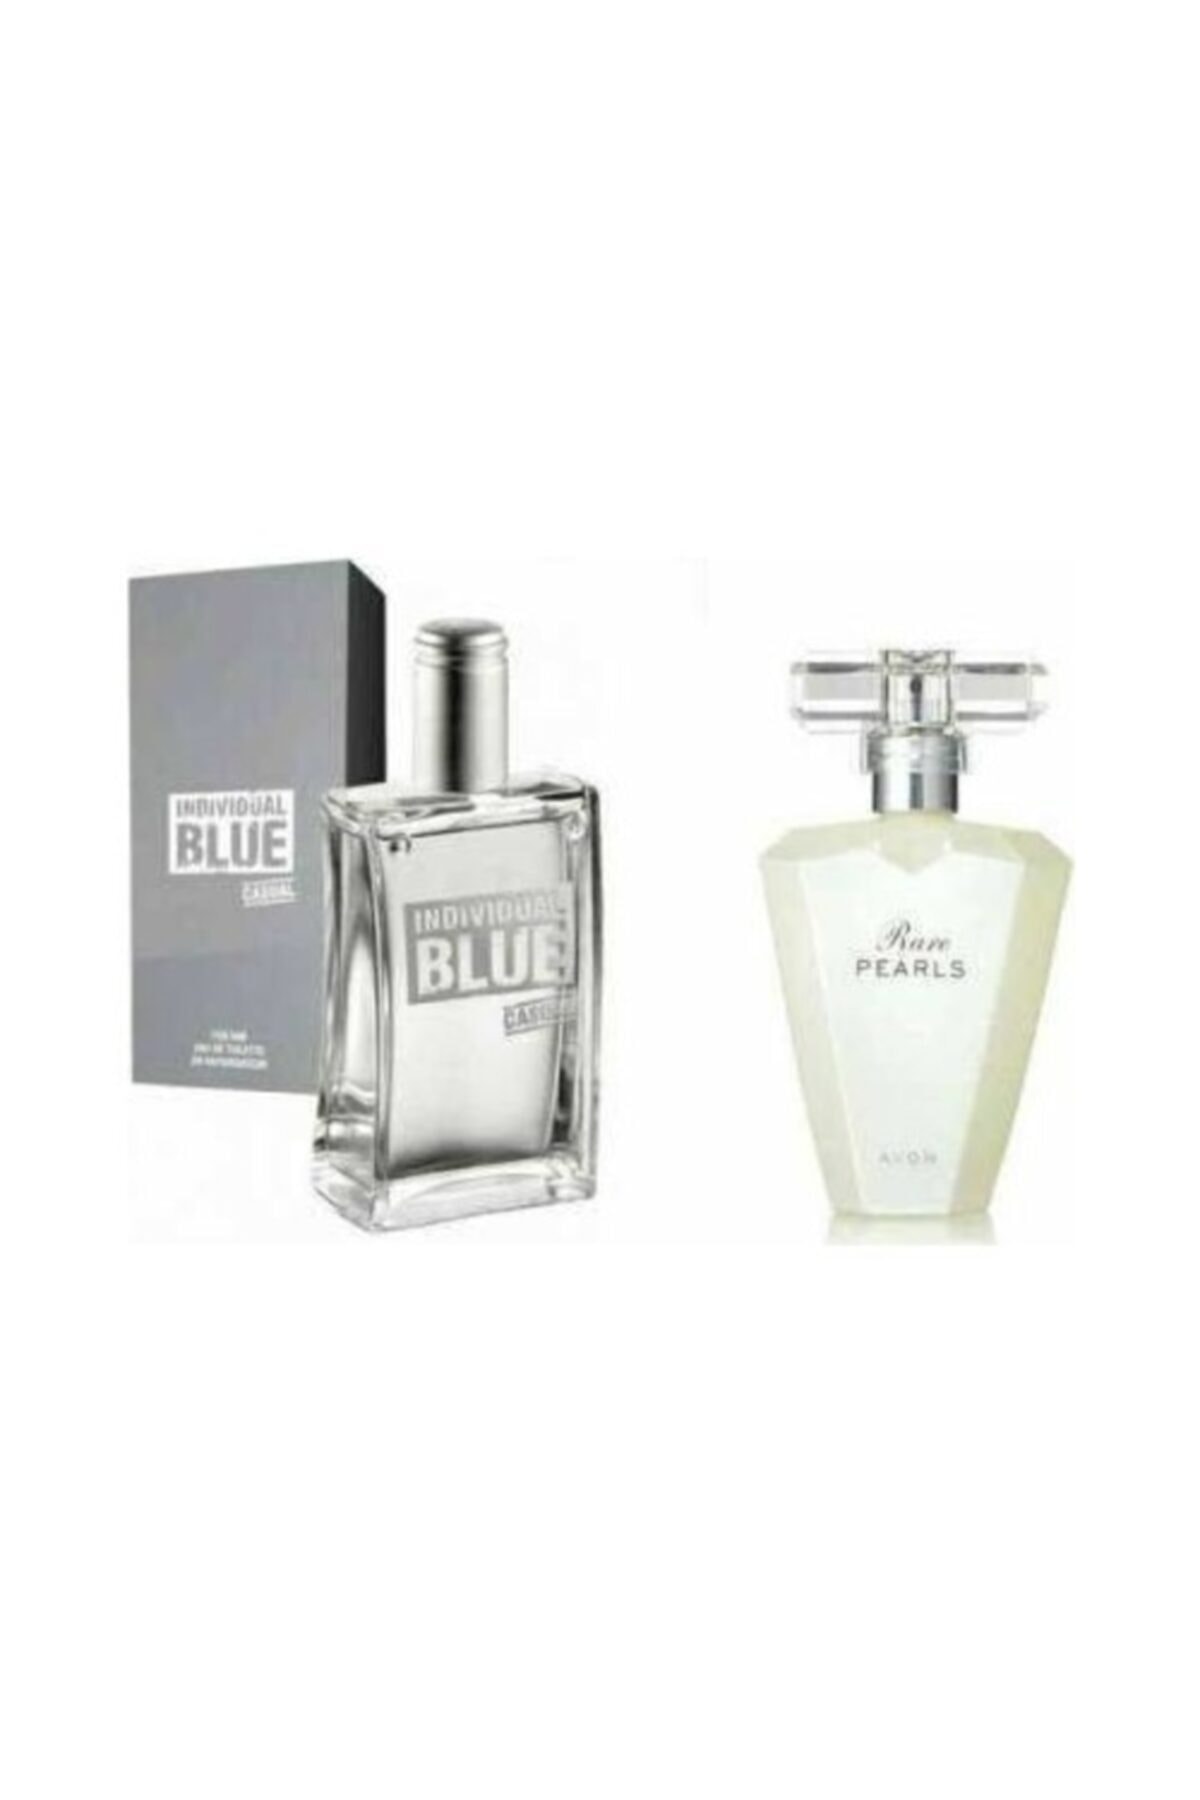 AVON Individual Blue Casual Edt 100 ml Erkek Parfüm + Rare Pearls Edt 50 ml Kadın Parfüm 3098762845631